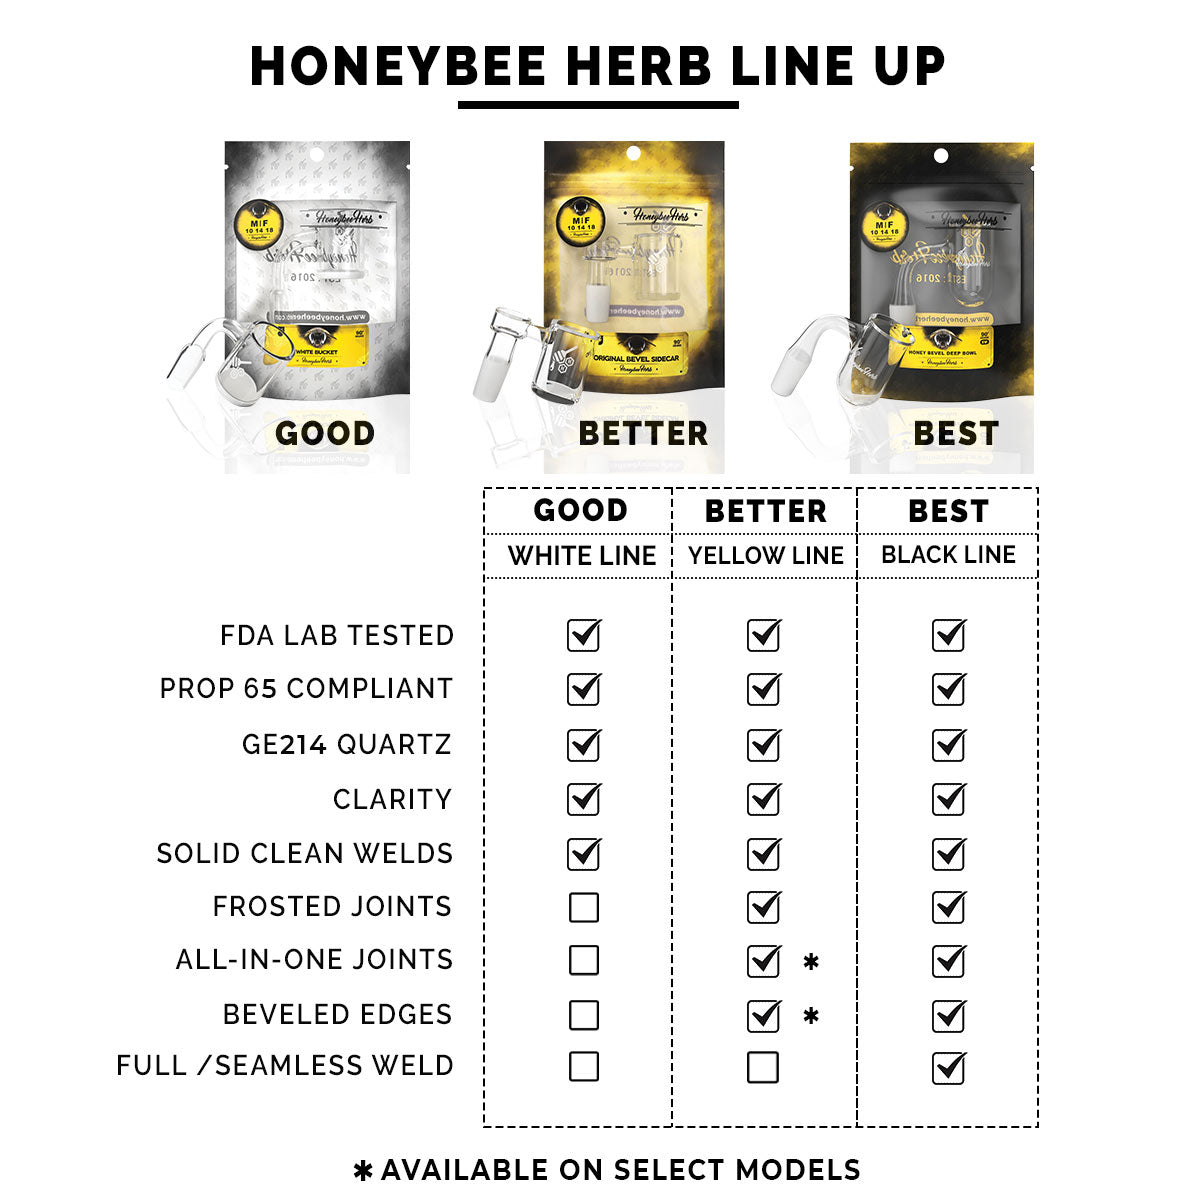 Honeybee Herb quality comparison chart for quartz bangers, showing Good, Better, Best categories.